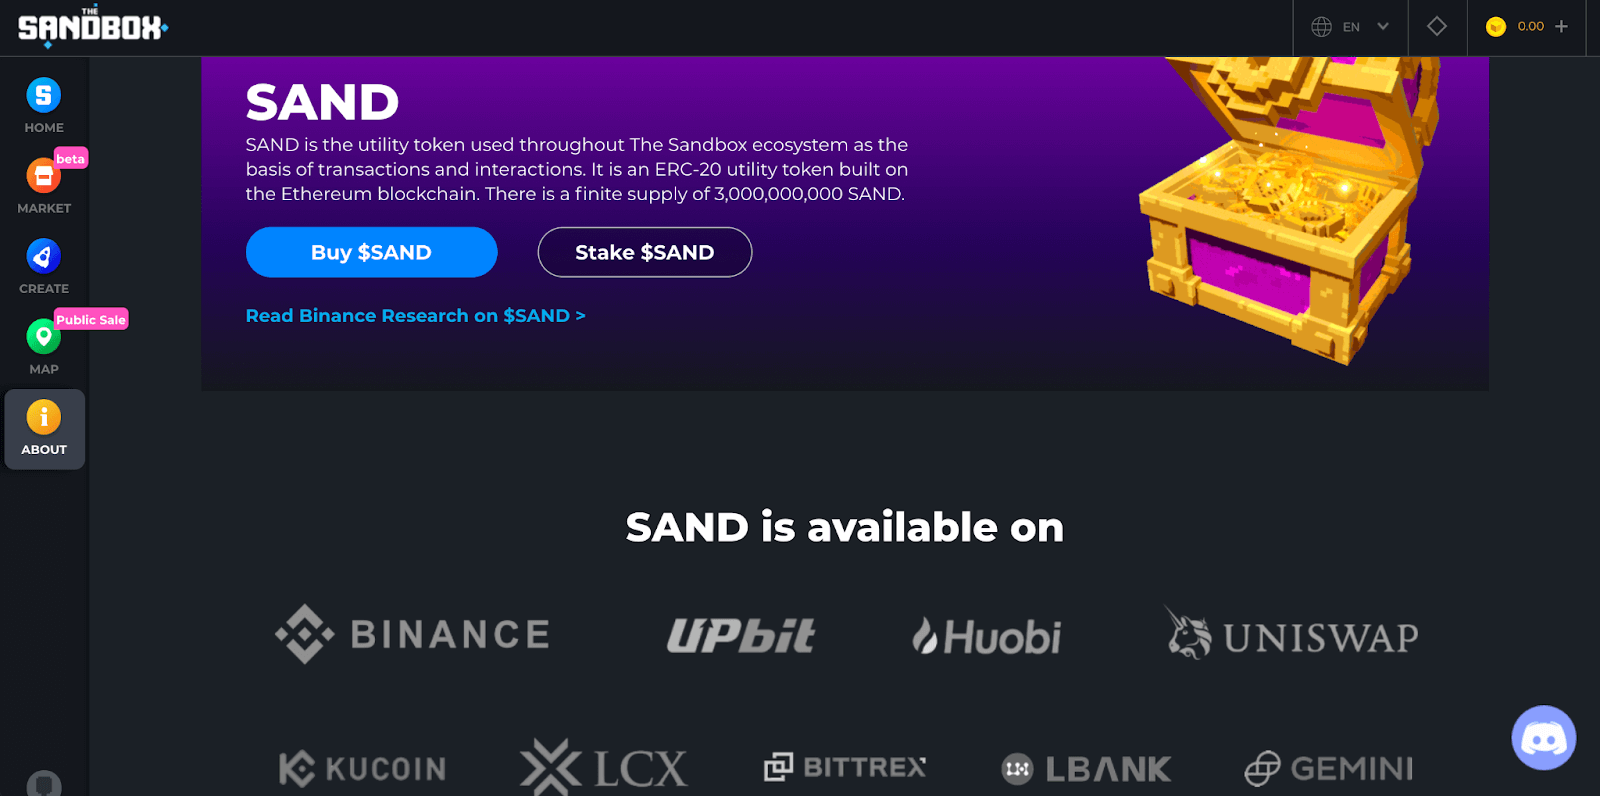 The Sandbox － 打造像是一級玩家的數位世界